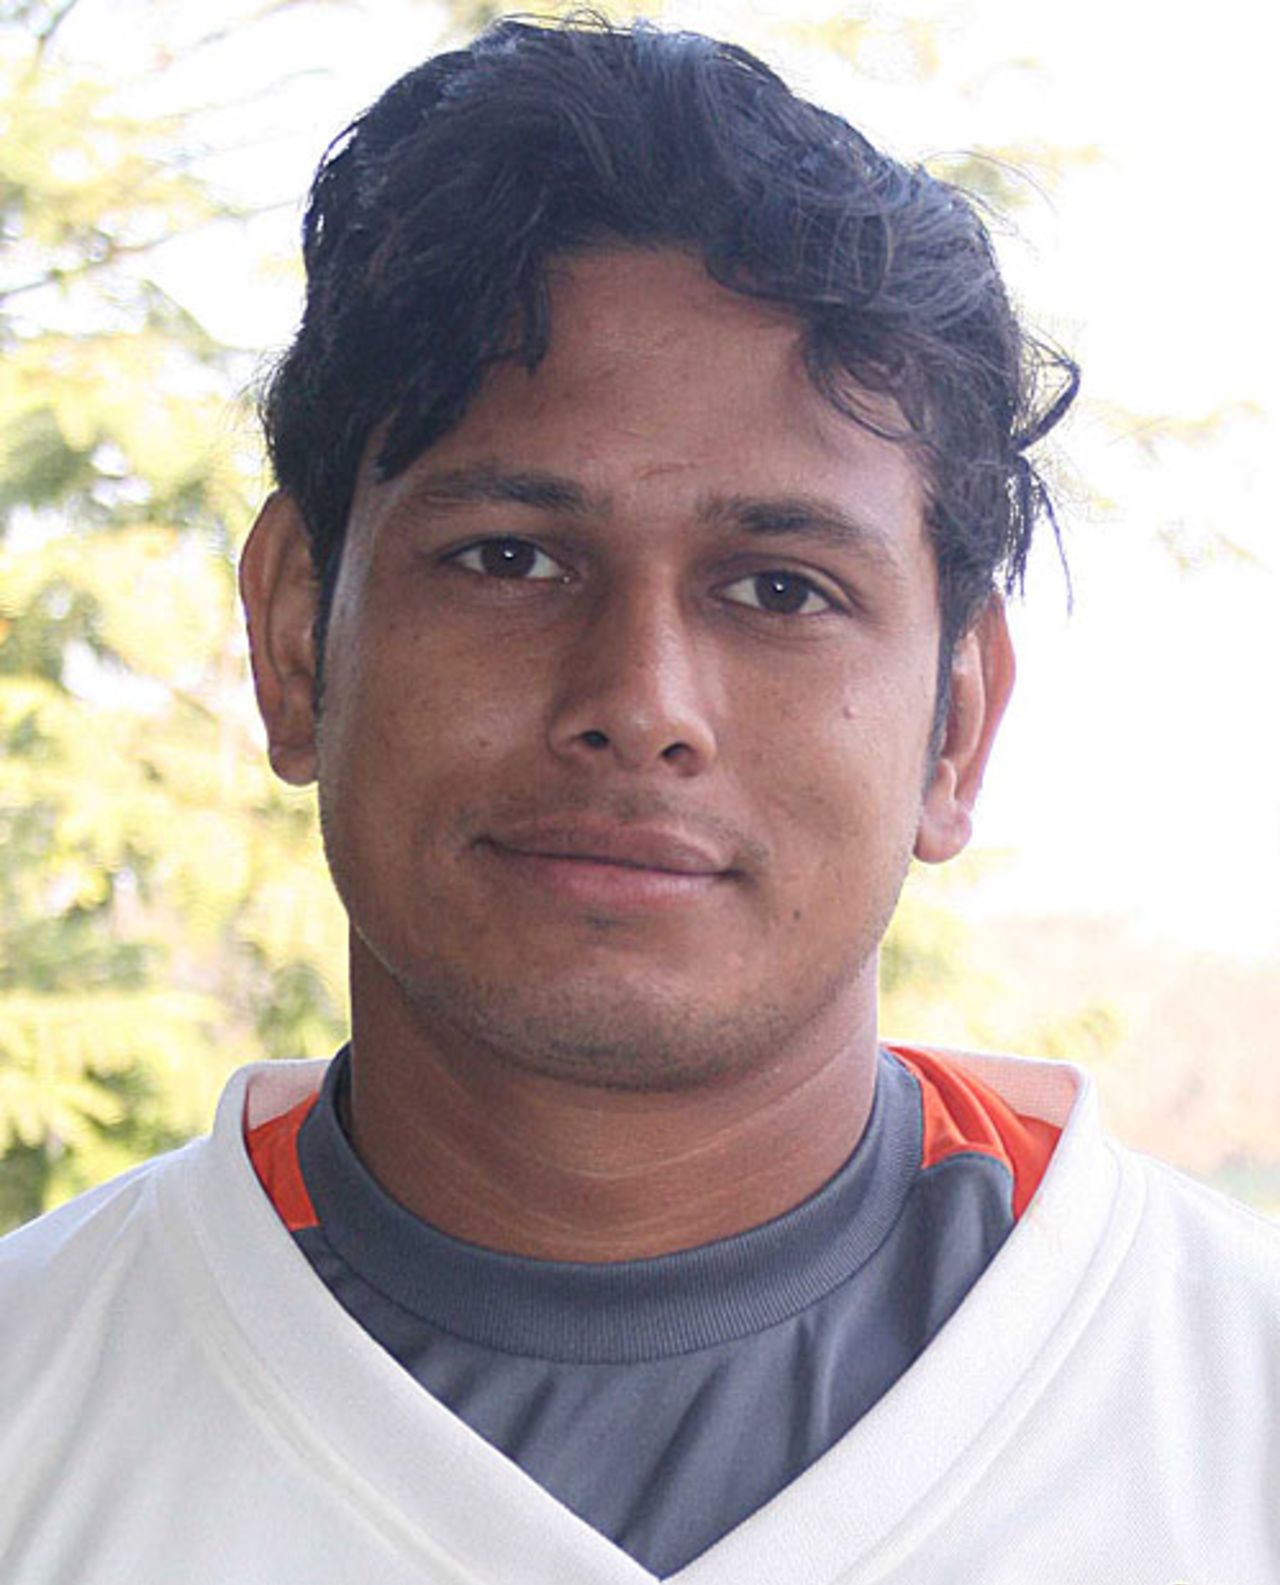 Preetamjit Das, player portrait, December 2009